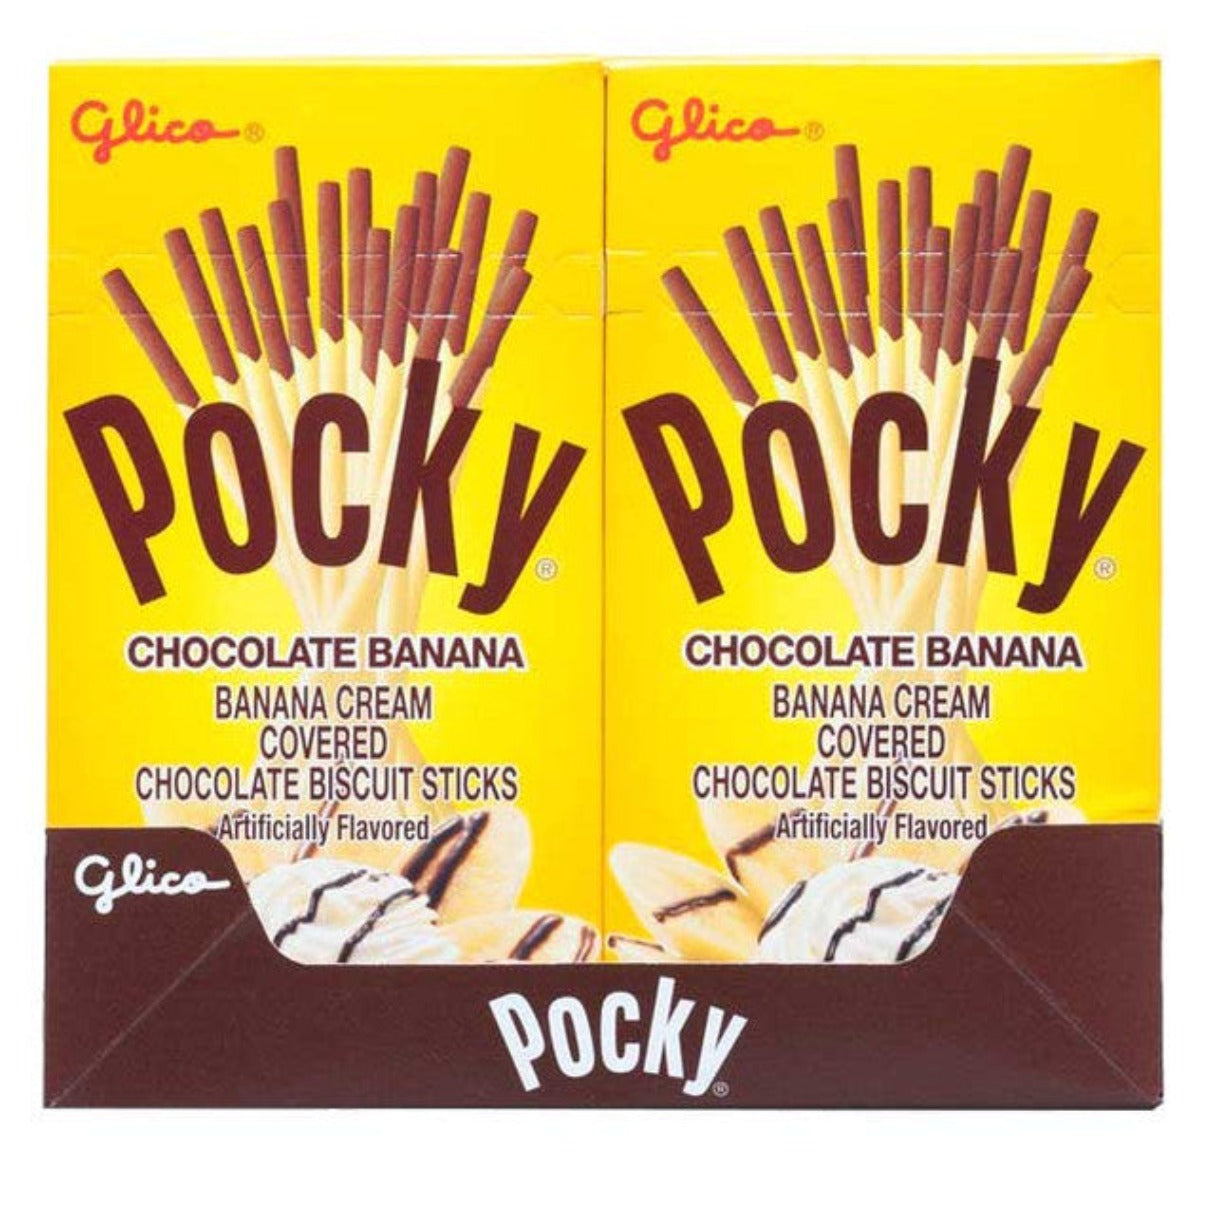 Glico Pocky Chocolate Banana Cookie Sticks 2.46oz - 10ct